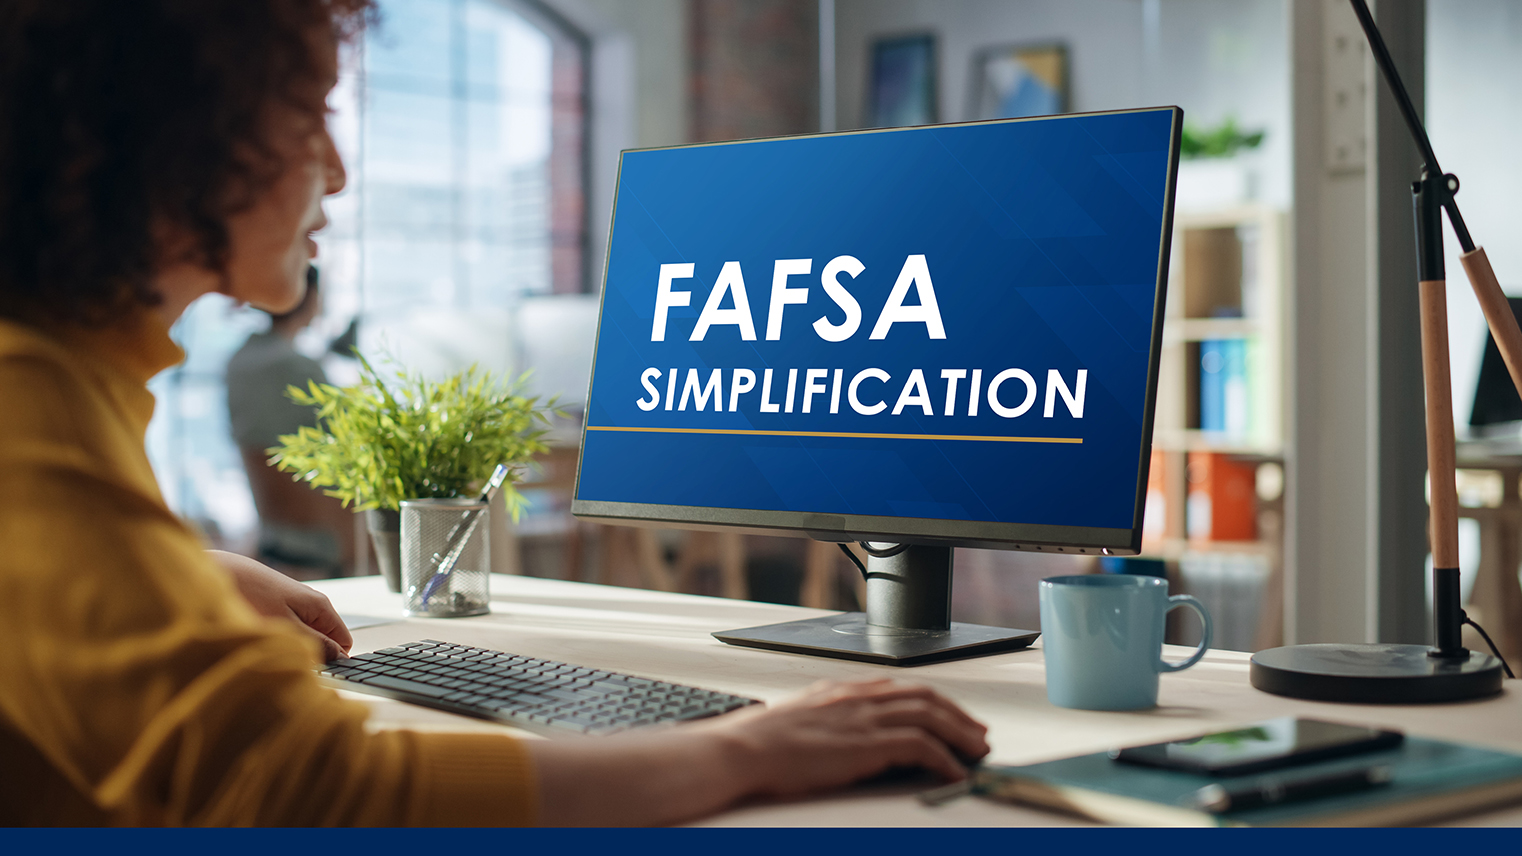 FAFSA Simplification on a screen